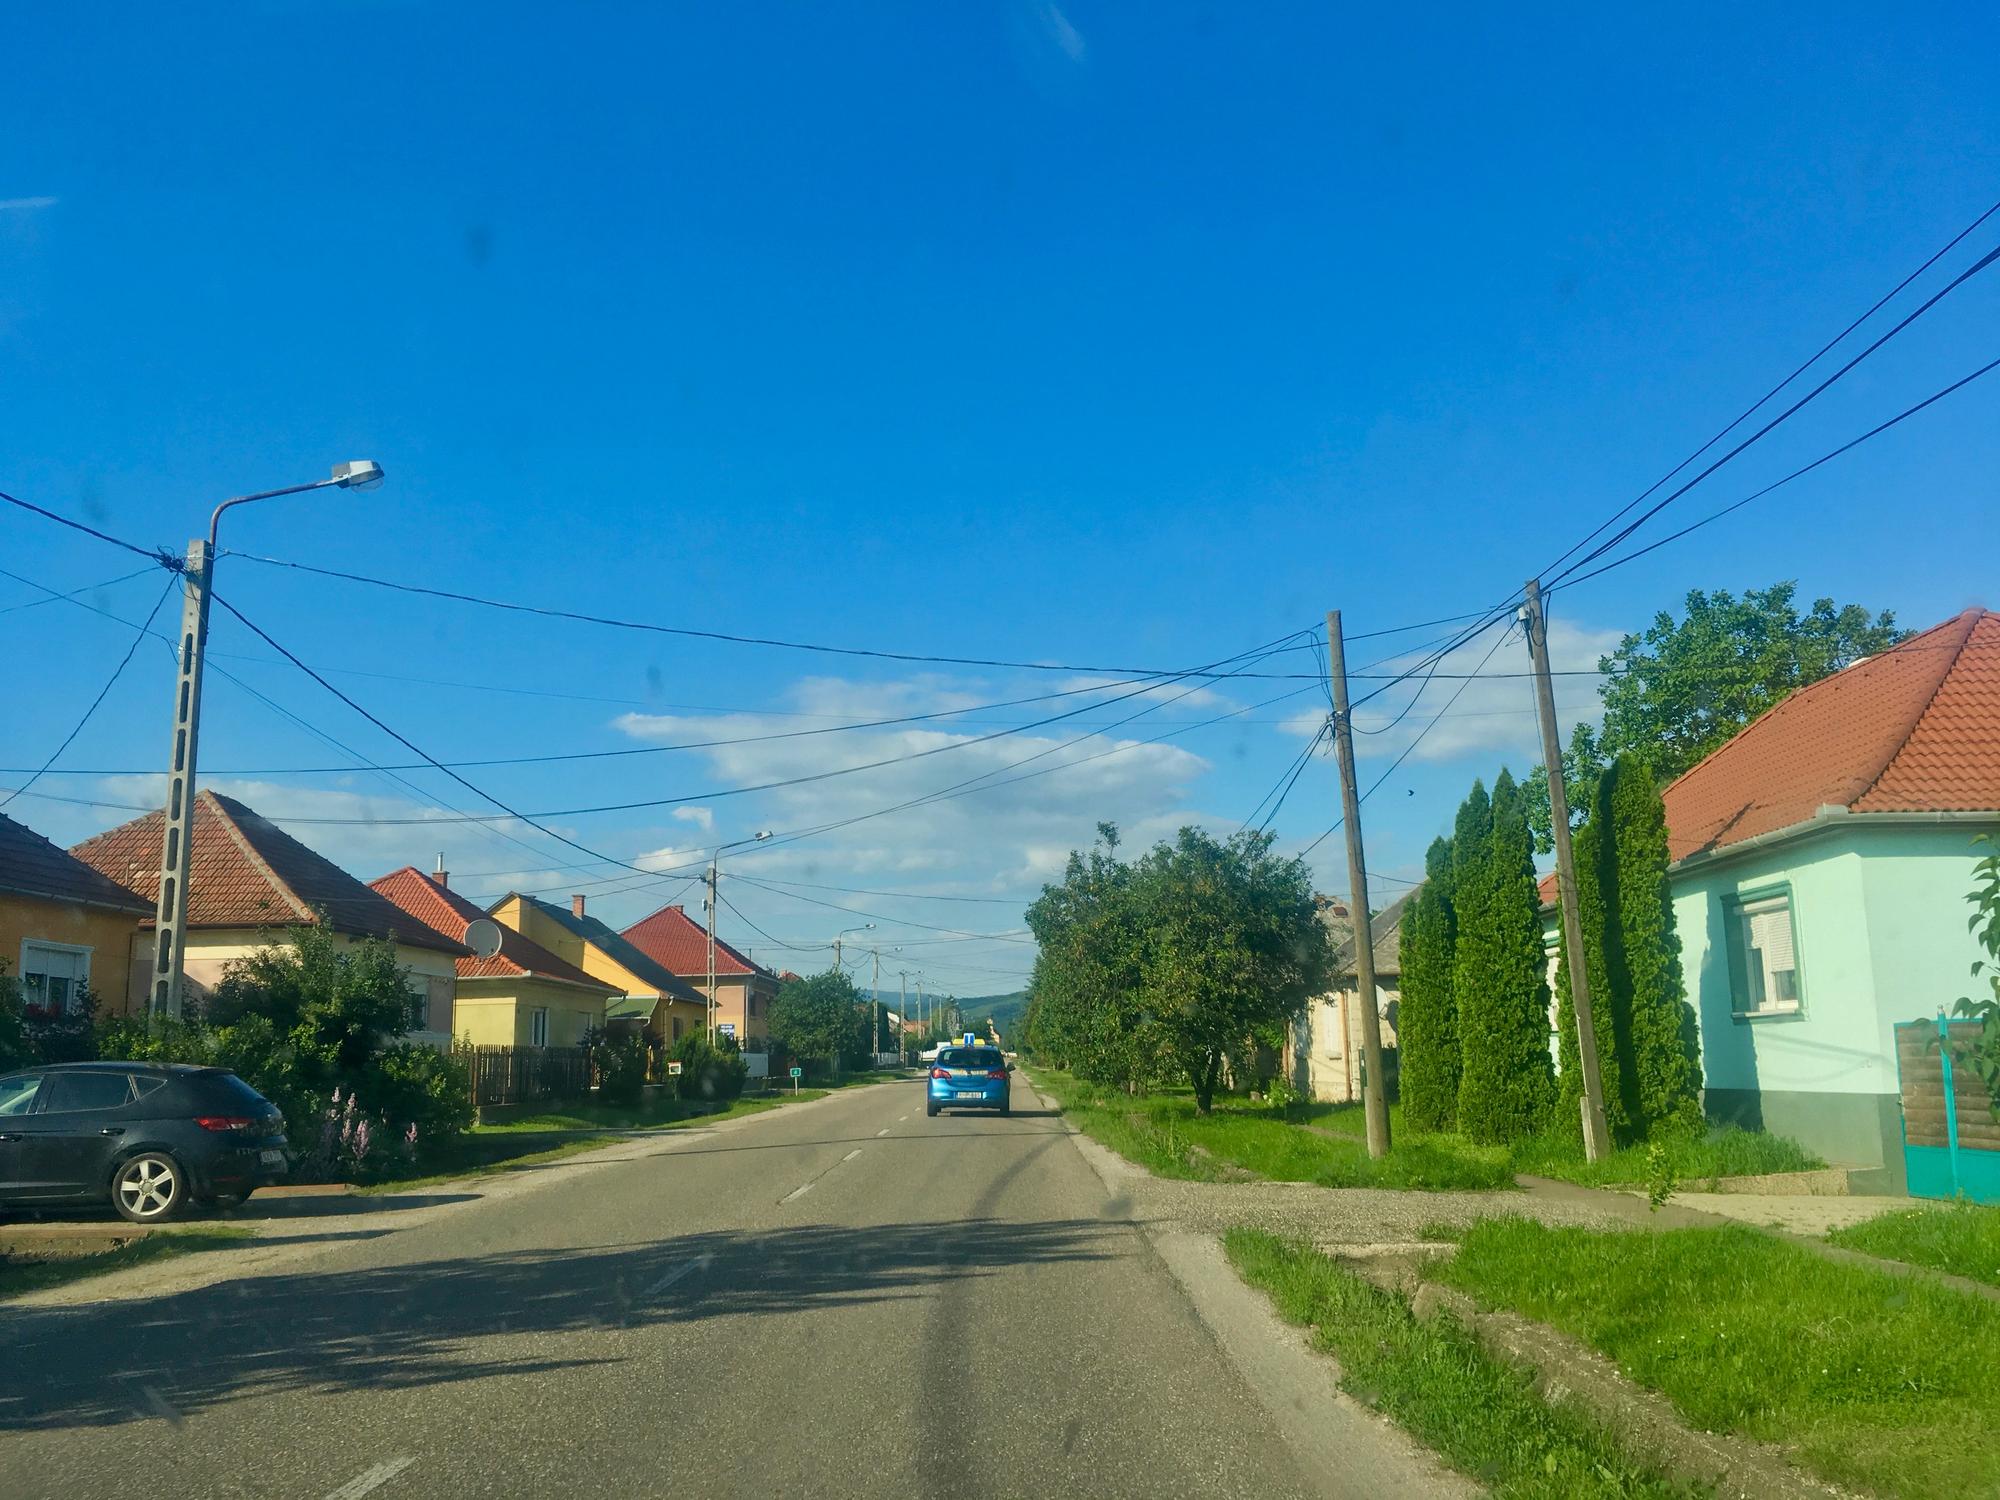 🇭🇺 Miskolc, Hungary, June 2019.